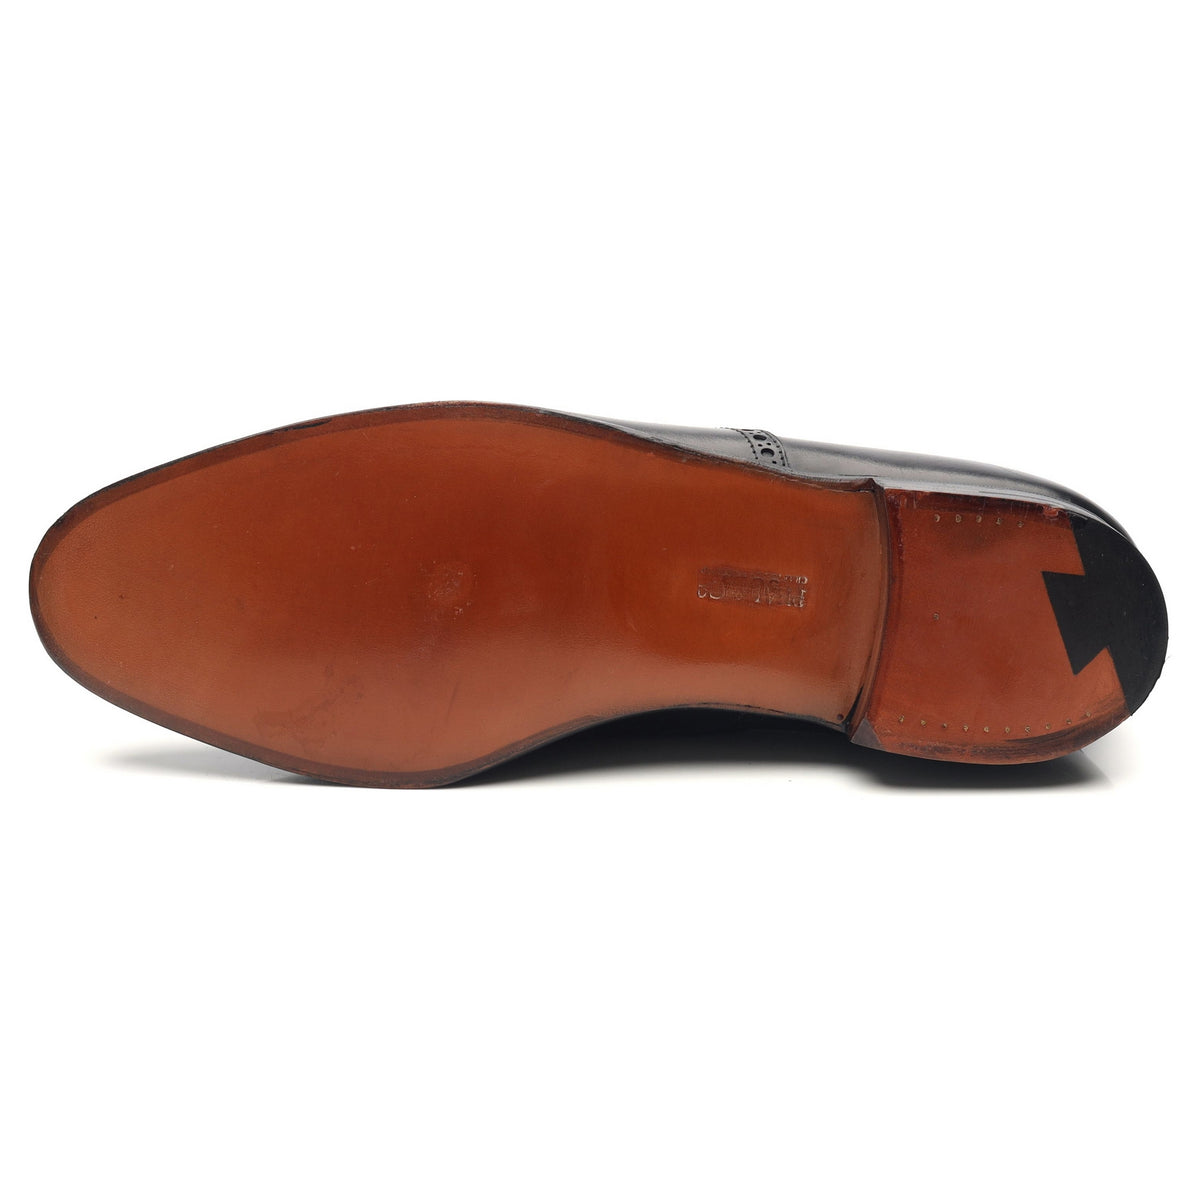 Peal &amp; Co Black Leather Loafer UK 9 E US 10 D